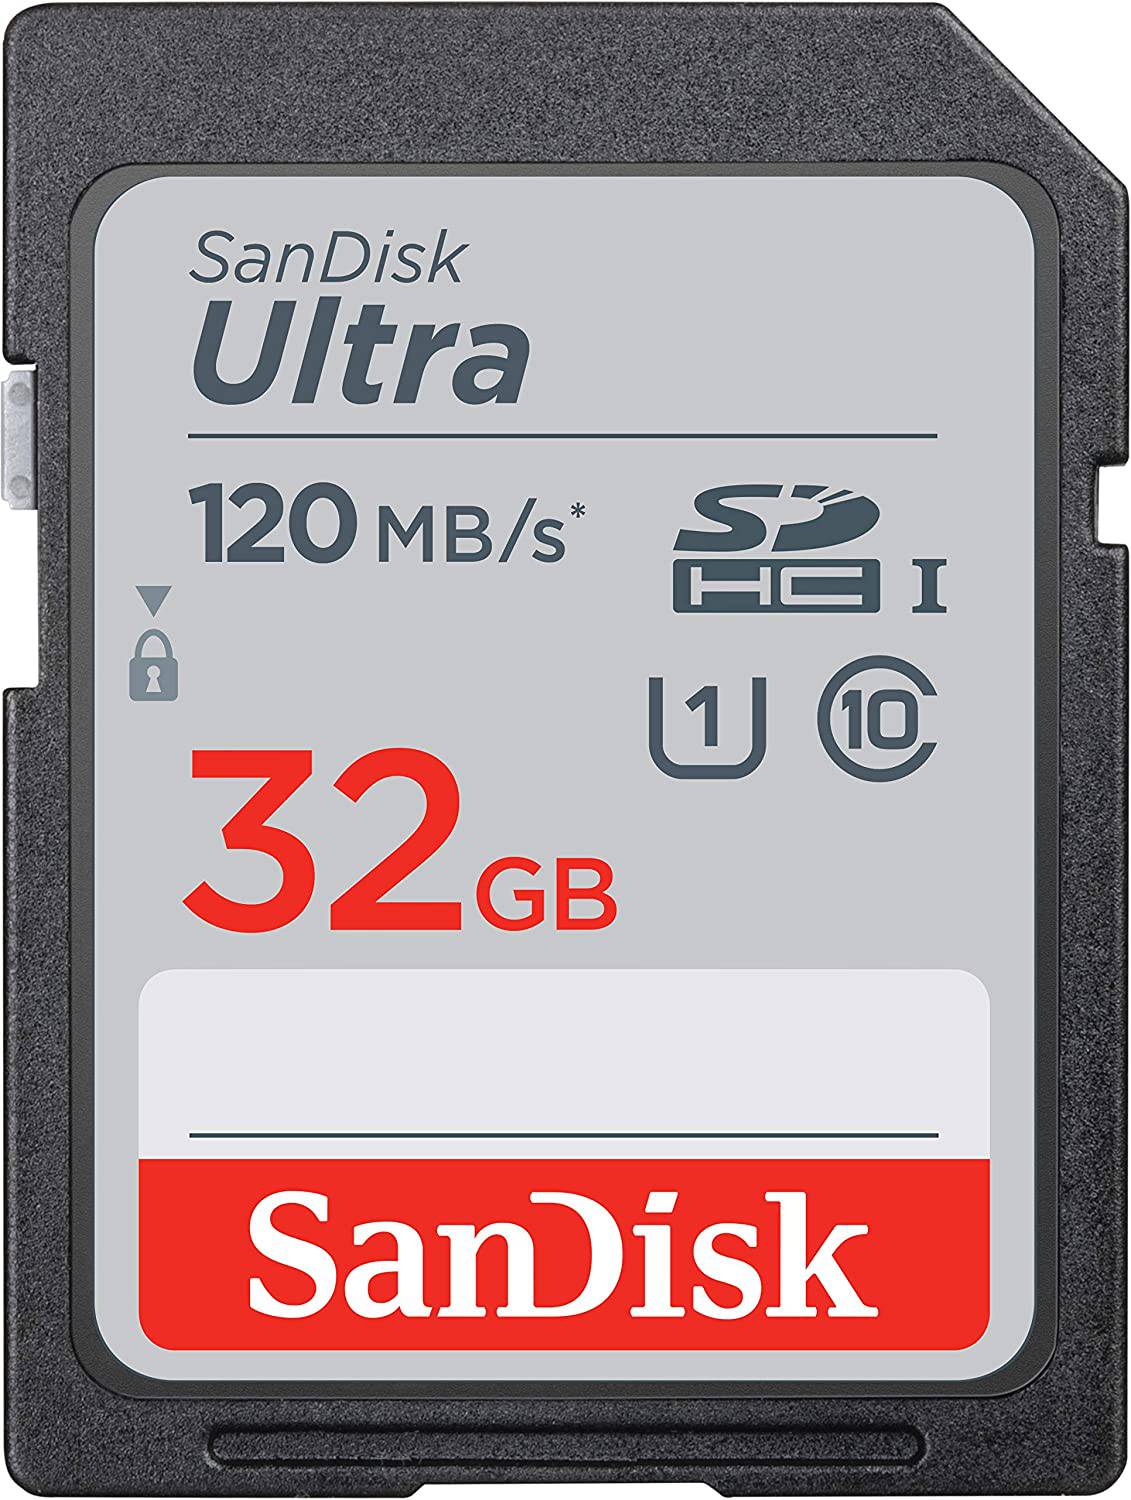 SanDisk 32GB Ultra SDHC UHS-I Memory Card - 120MB/s, C10, U1, Full HD, SD Card King Gaming